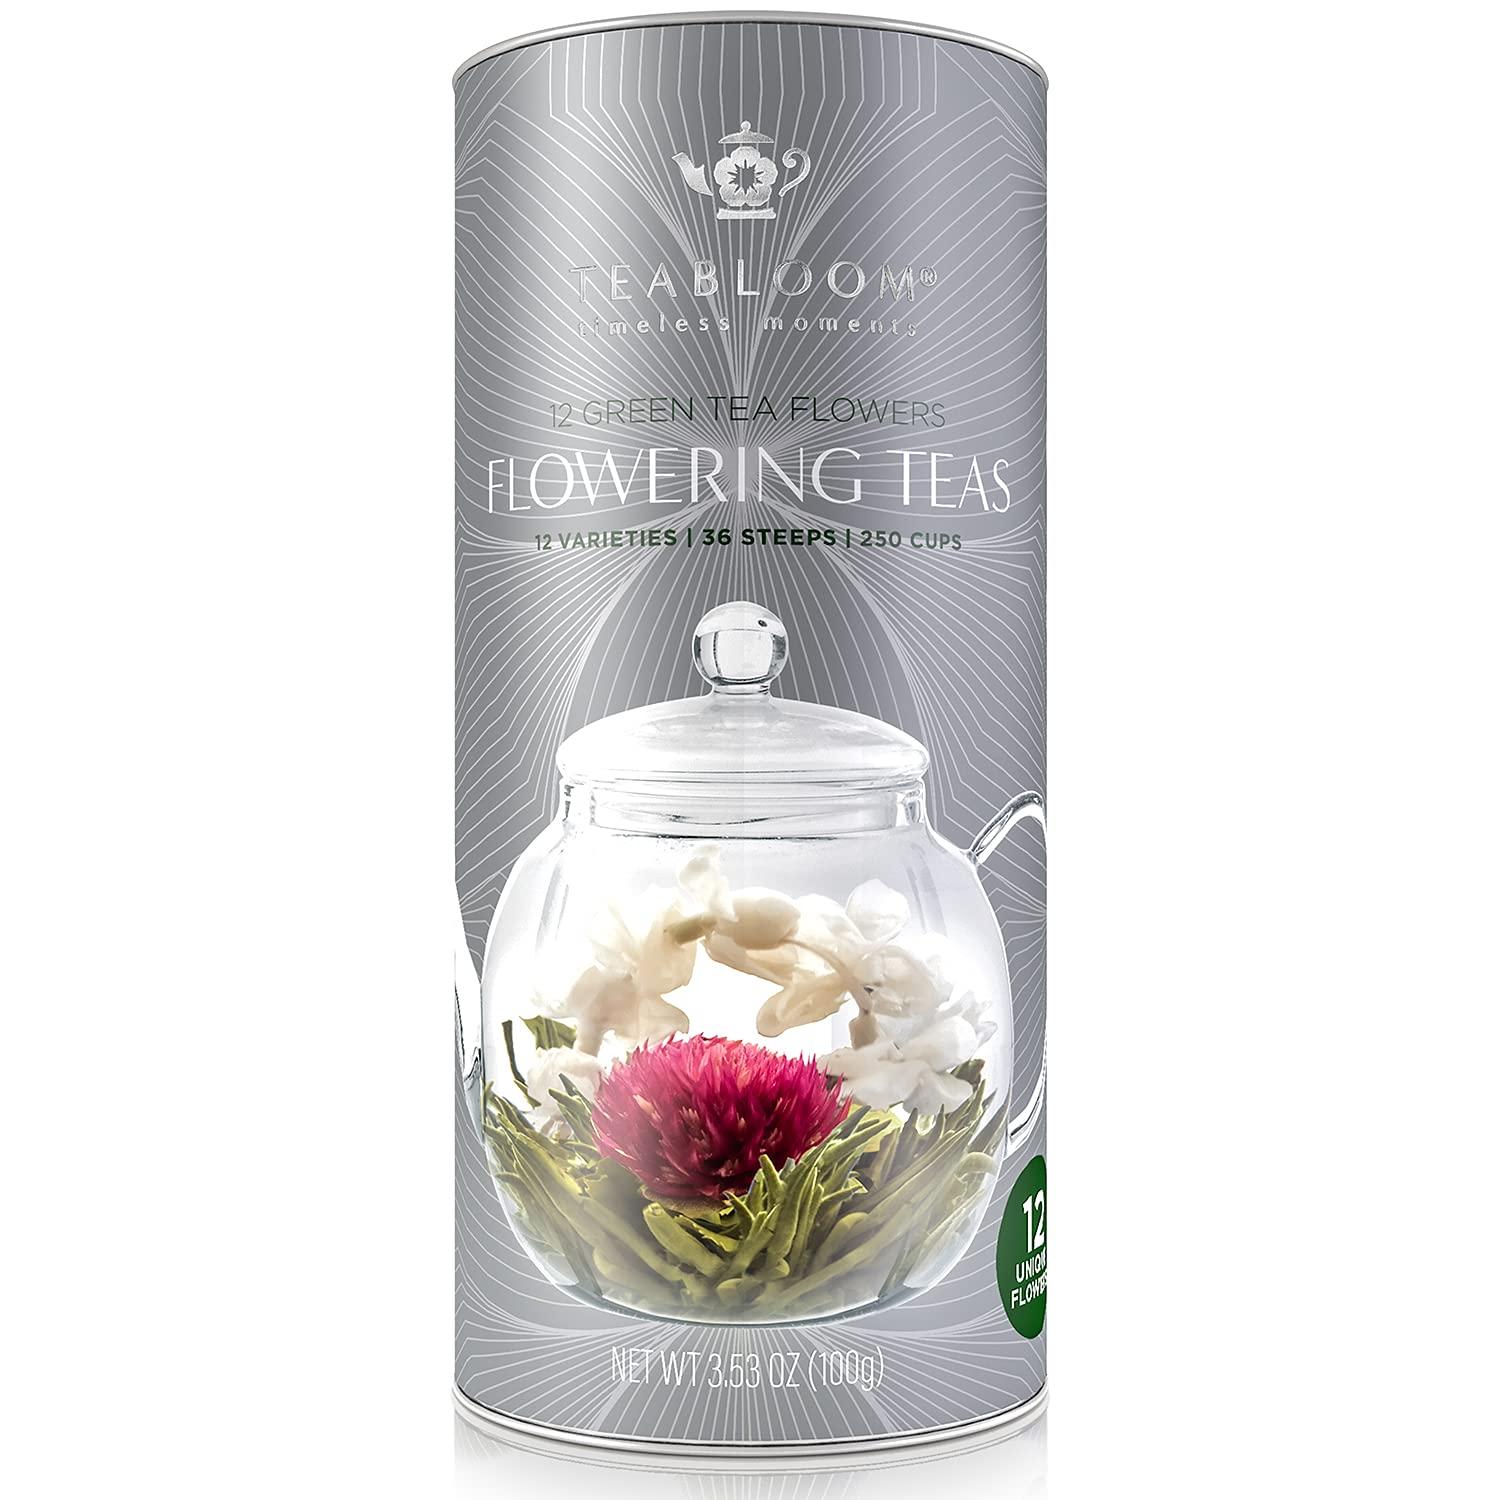 Whole Jasmine Flower Tea, Size: 0.5 oz